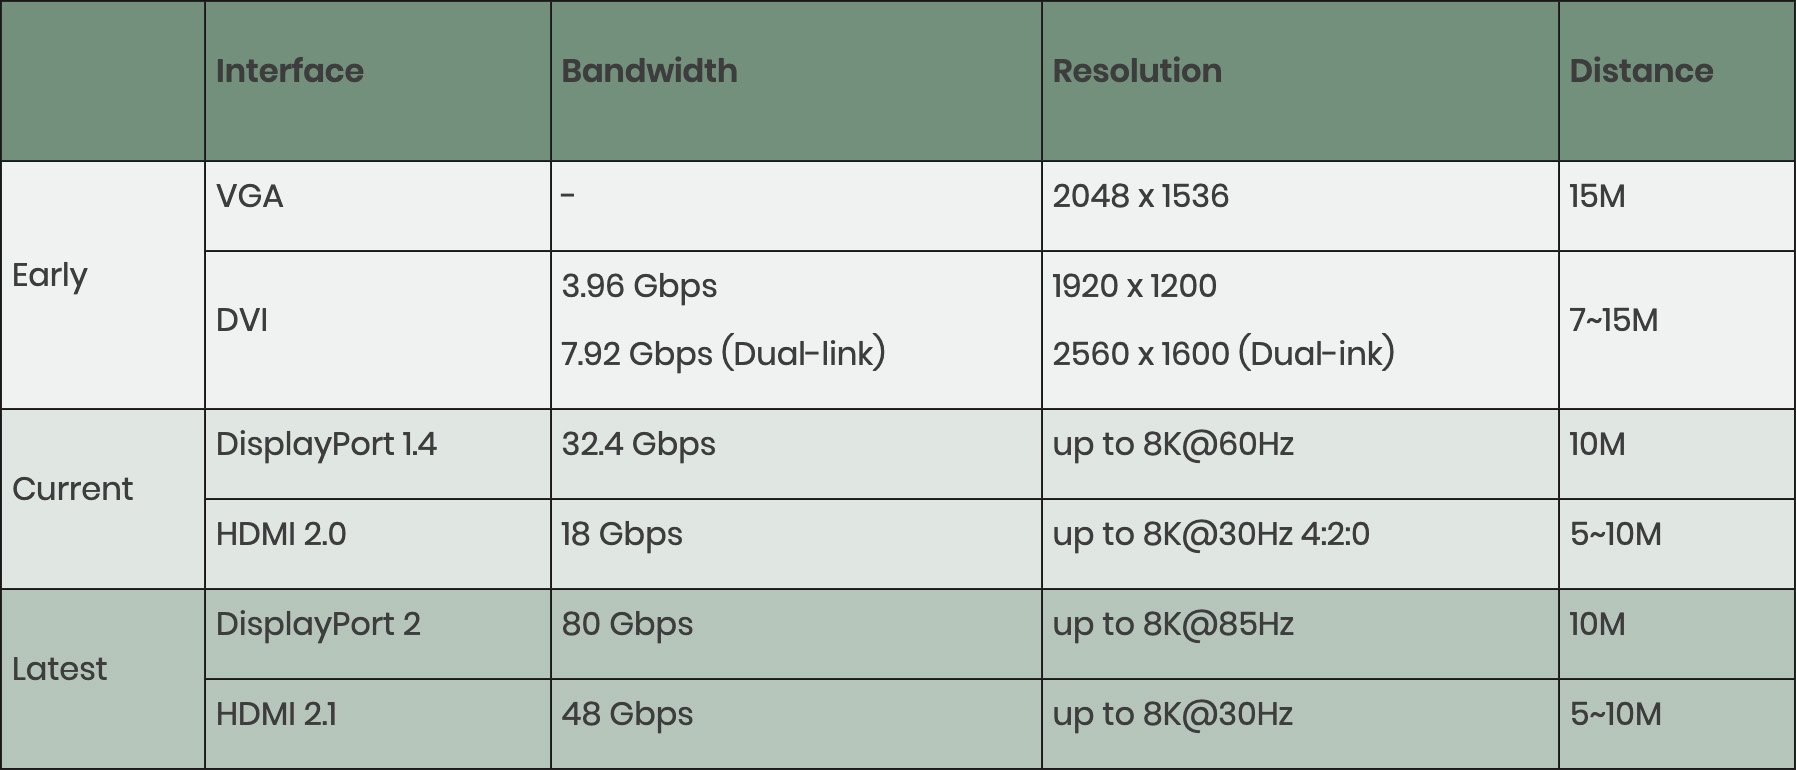 HDMI vs. DisplayPort: Which display interface reigns supreme